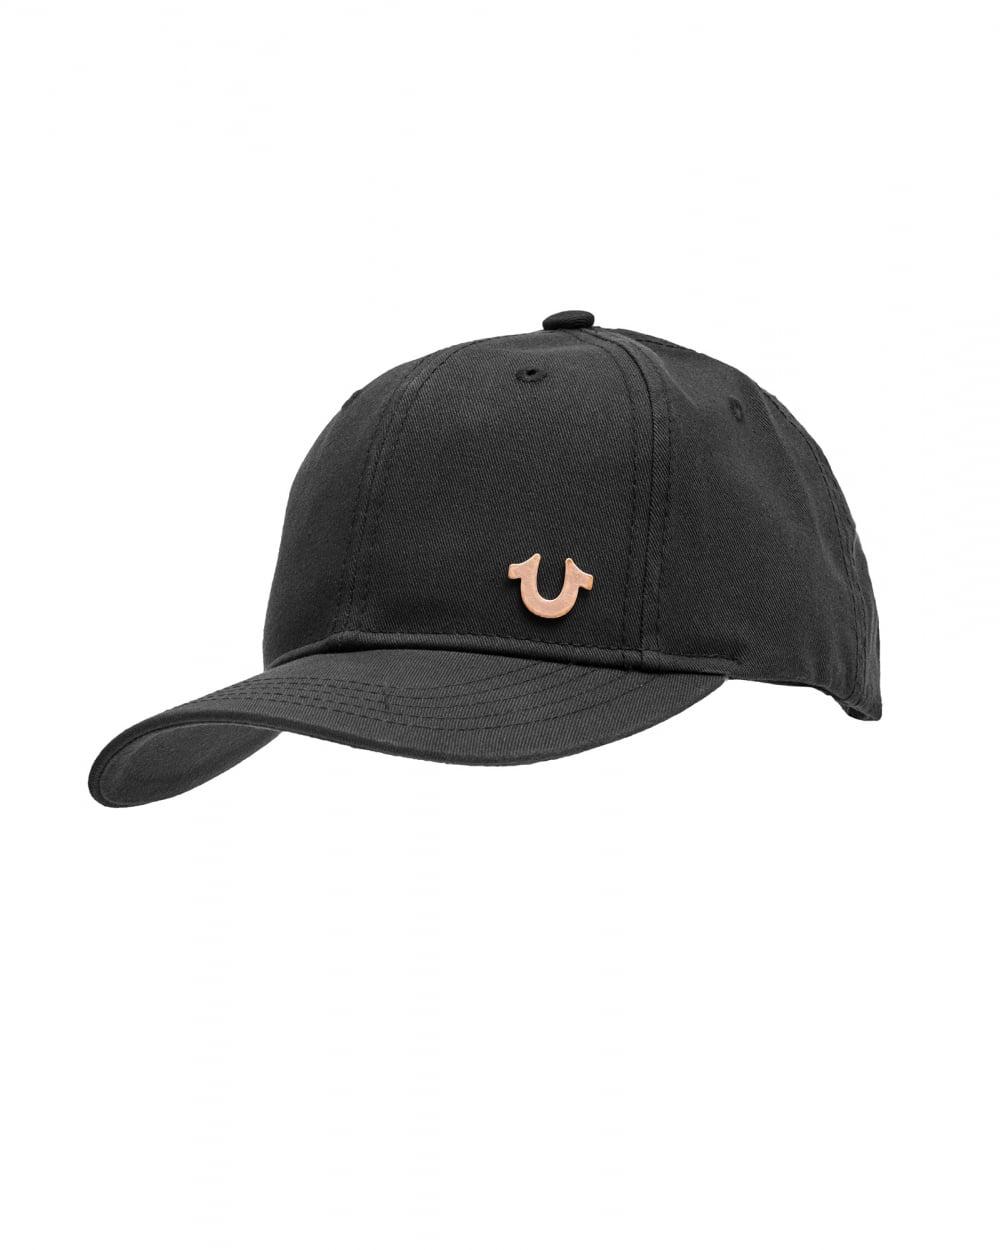 Black Horseshoe Logo - True Religion Mens Horseshoe Logo Cap, Black Hat